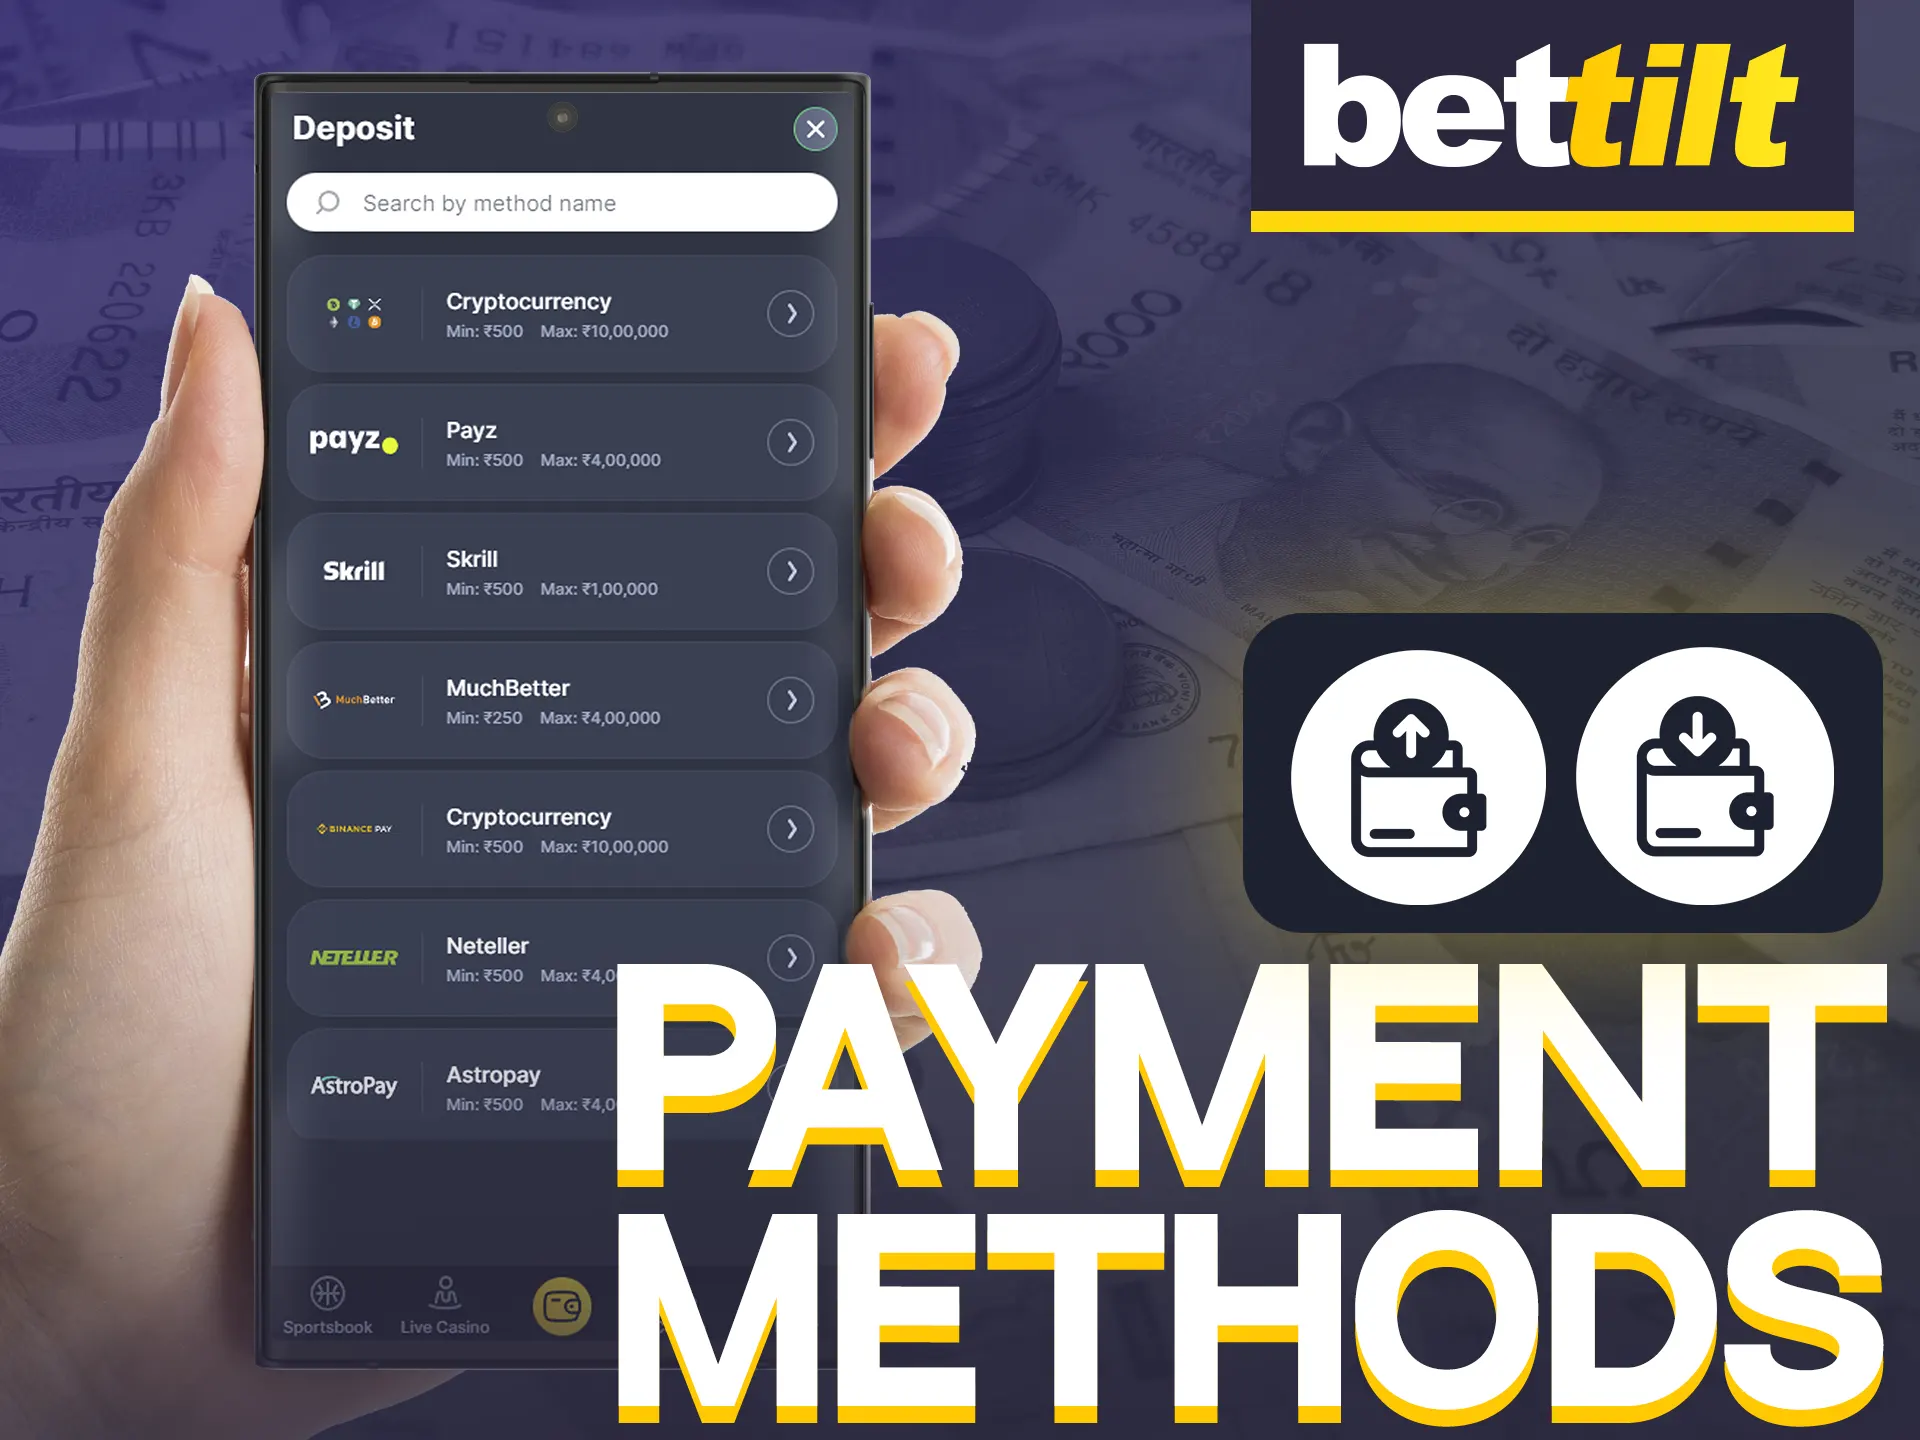 Bettilt app offers diverse payment methods for convenience.